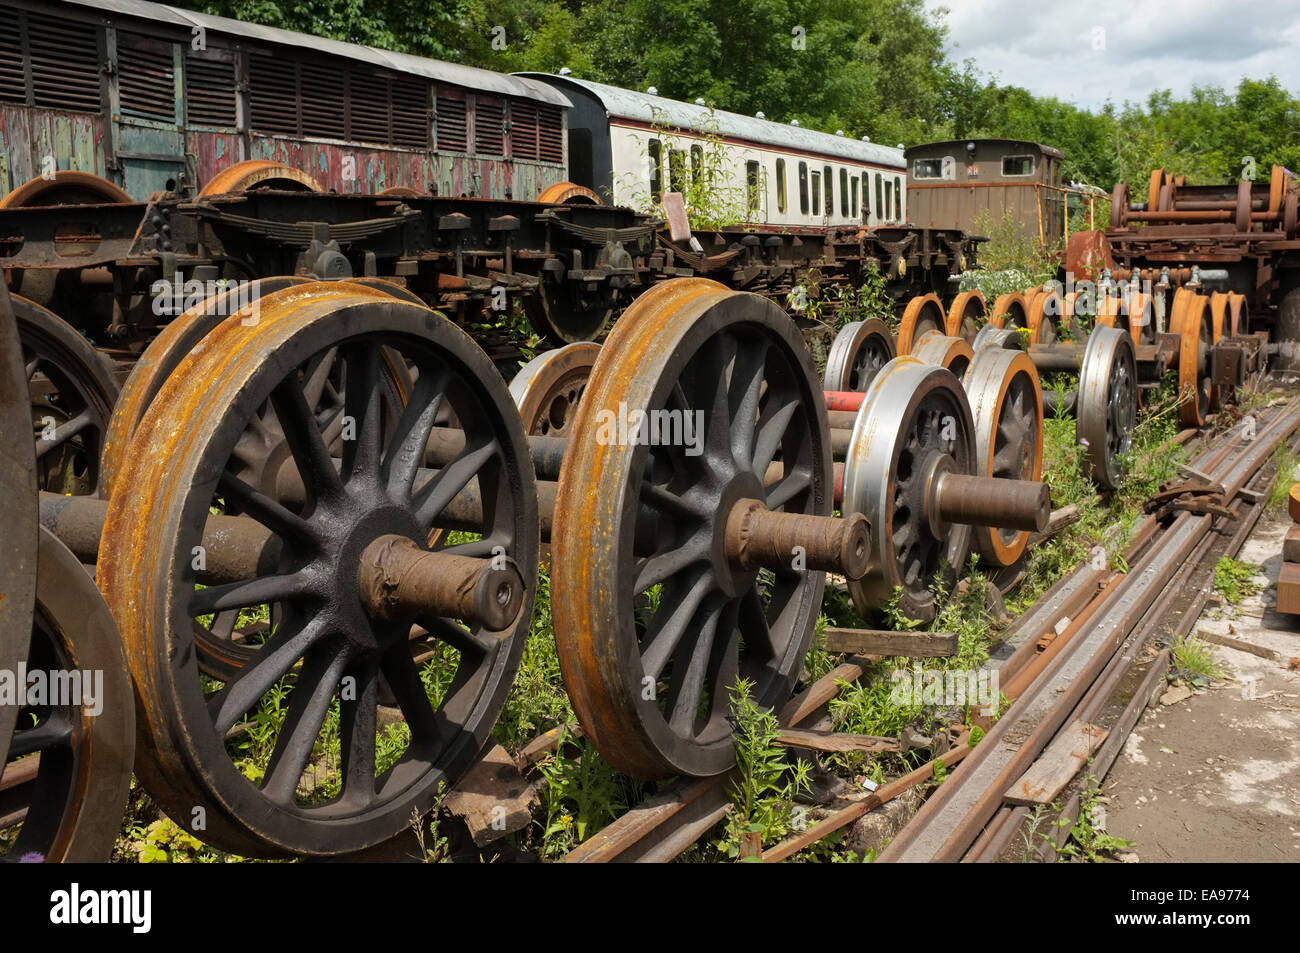 Rolling stock wheels at the South Devon Railway, Buckfastleigh, Devon, England. Stock Photo